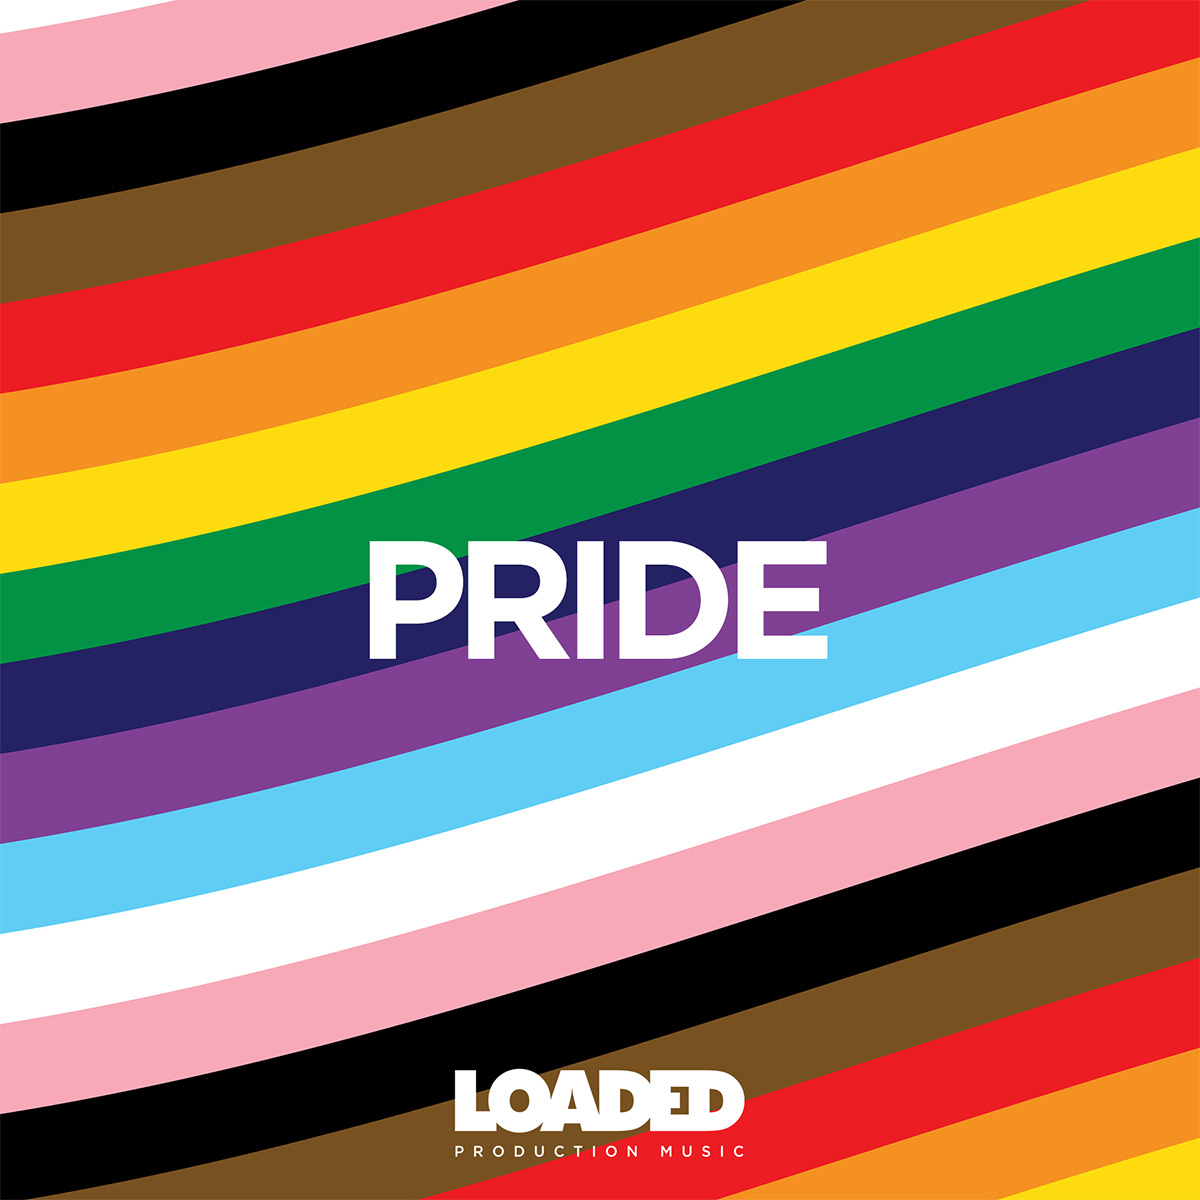 Pride Playlist with Rainbow Pride flag